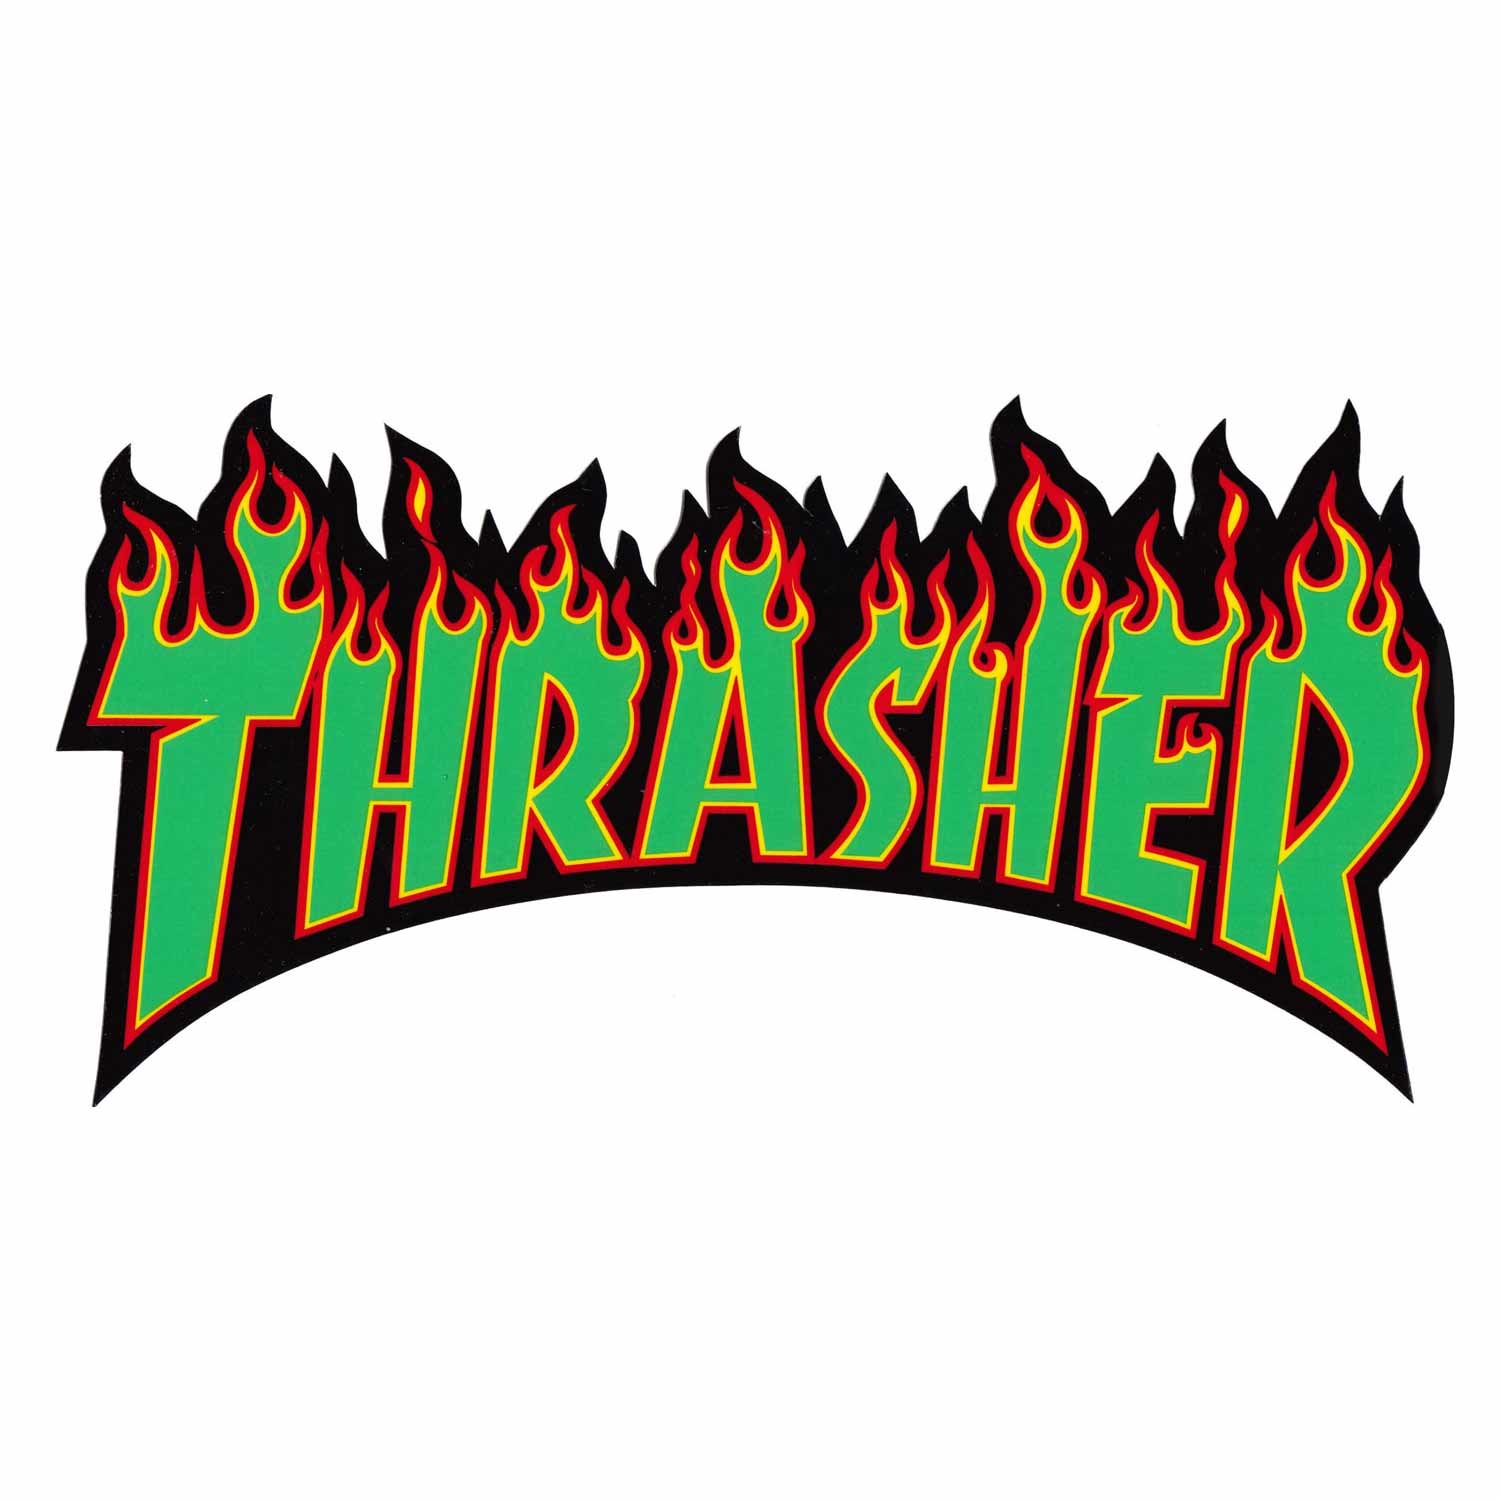 Cool Thrasher Logo - Thrasher Large Flames Sticker 5.5'' x 10.25'' Green